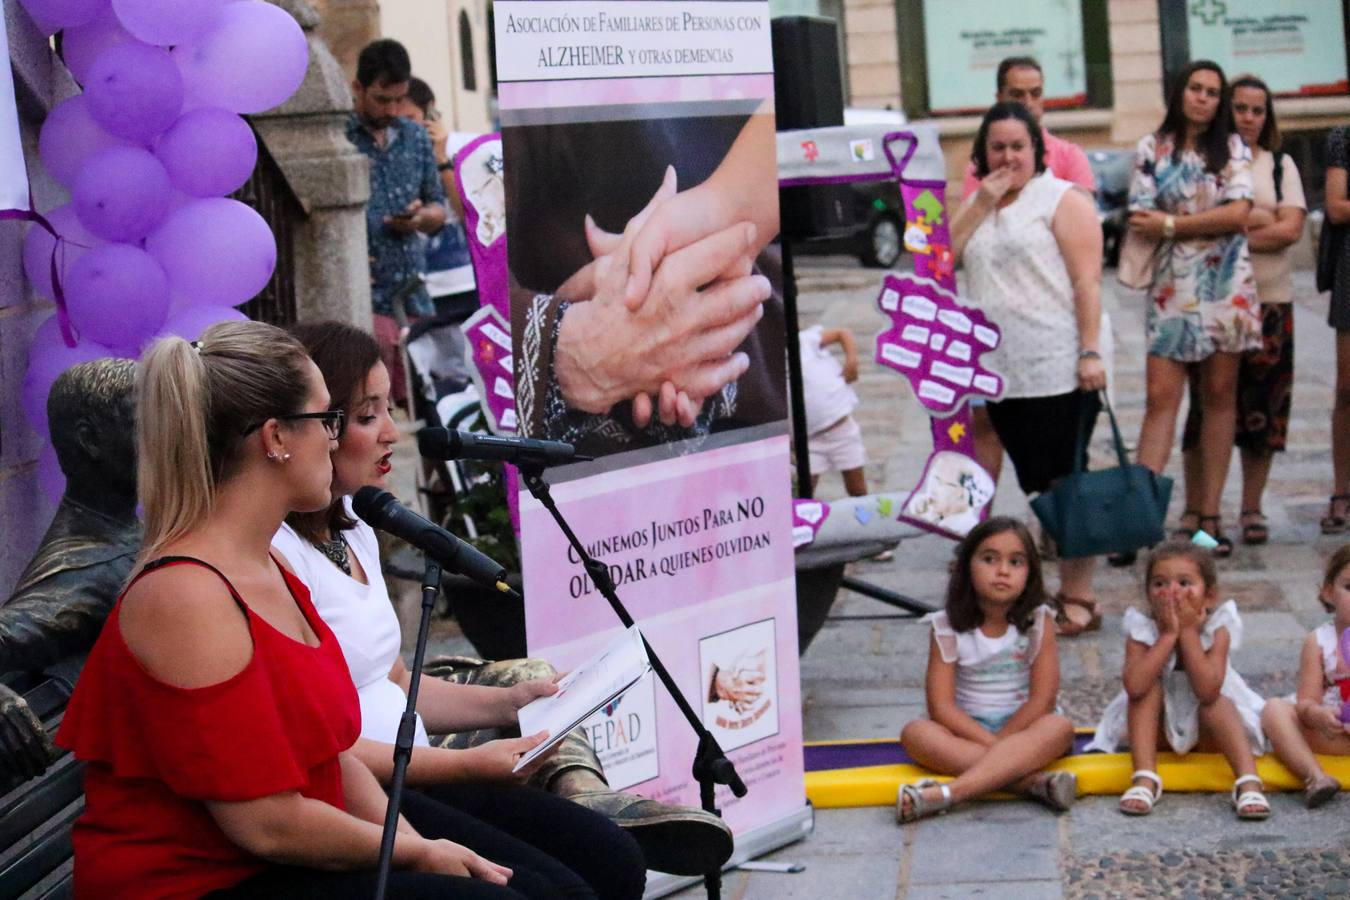 Jerez conmemora el Día Mundial del Alzhéimer